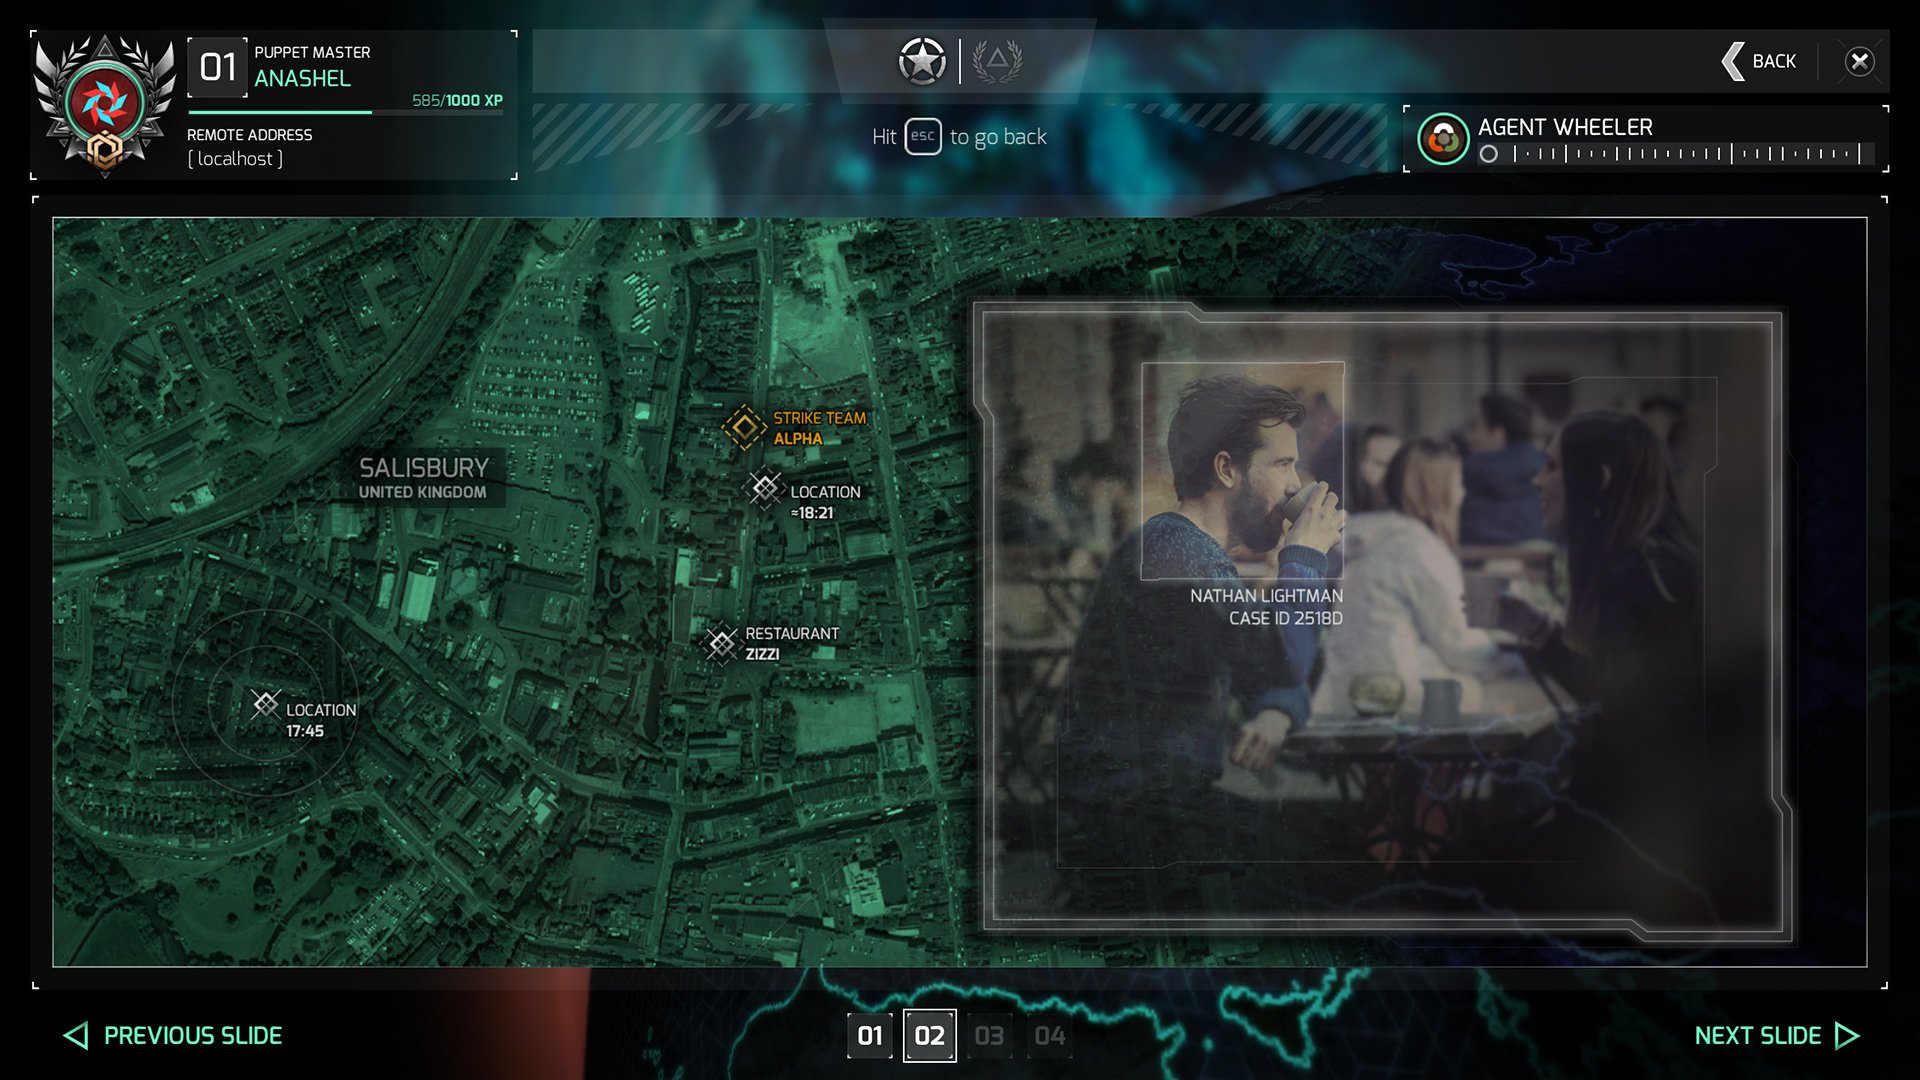 NITE Team 4 - Military Hacking Division screenshot